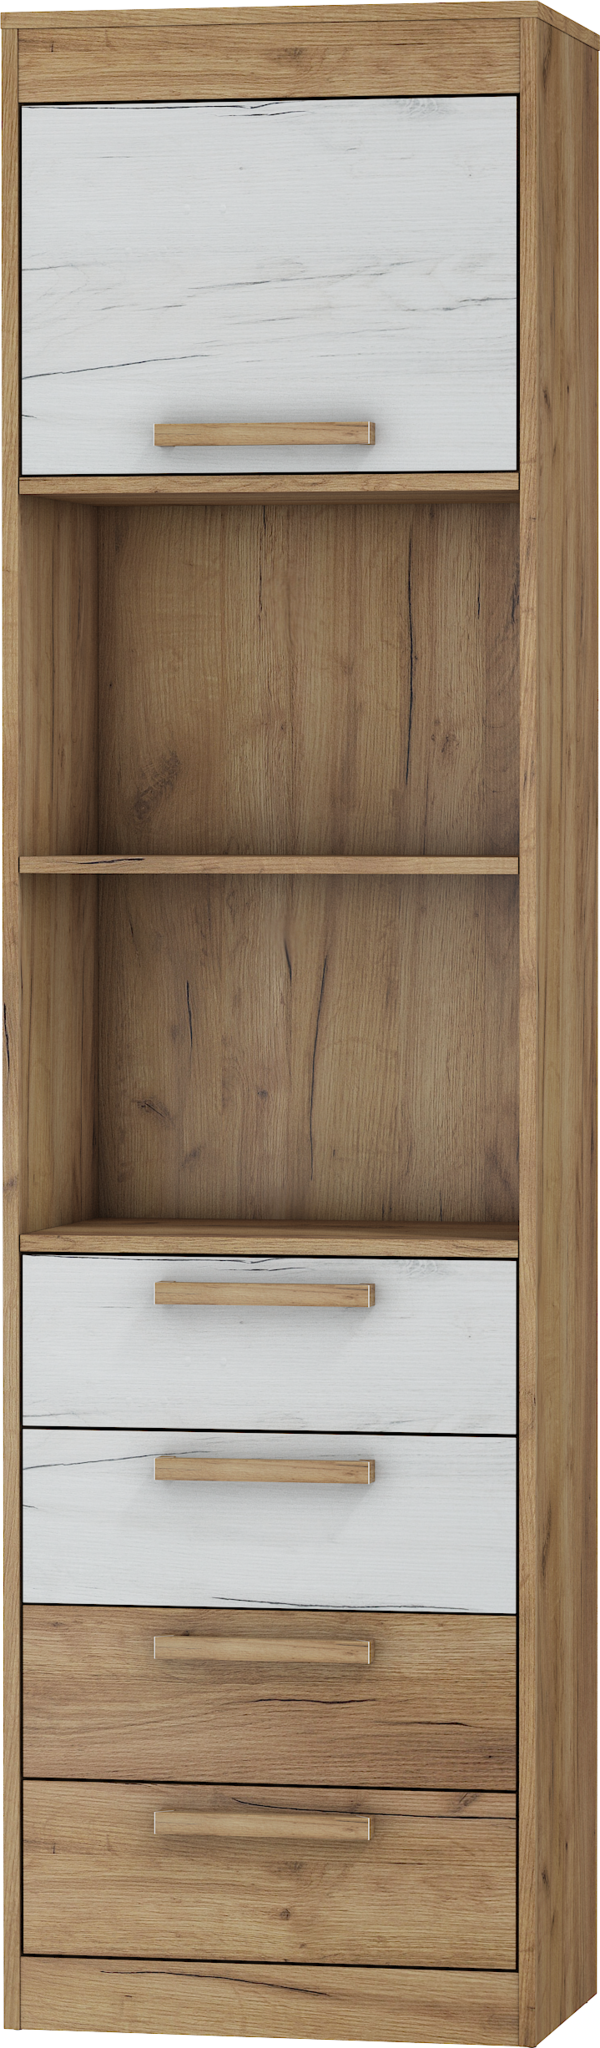 Shelf with doors ID-16050